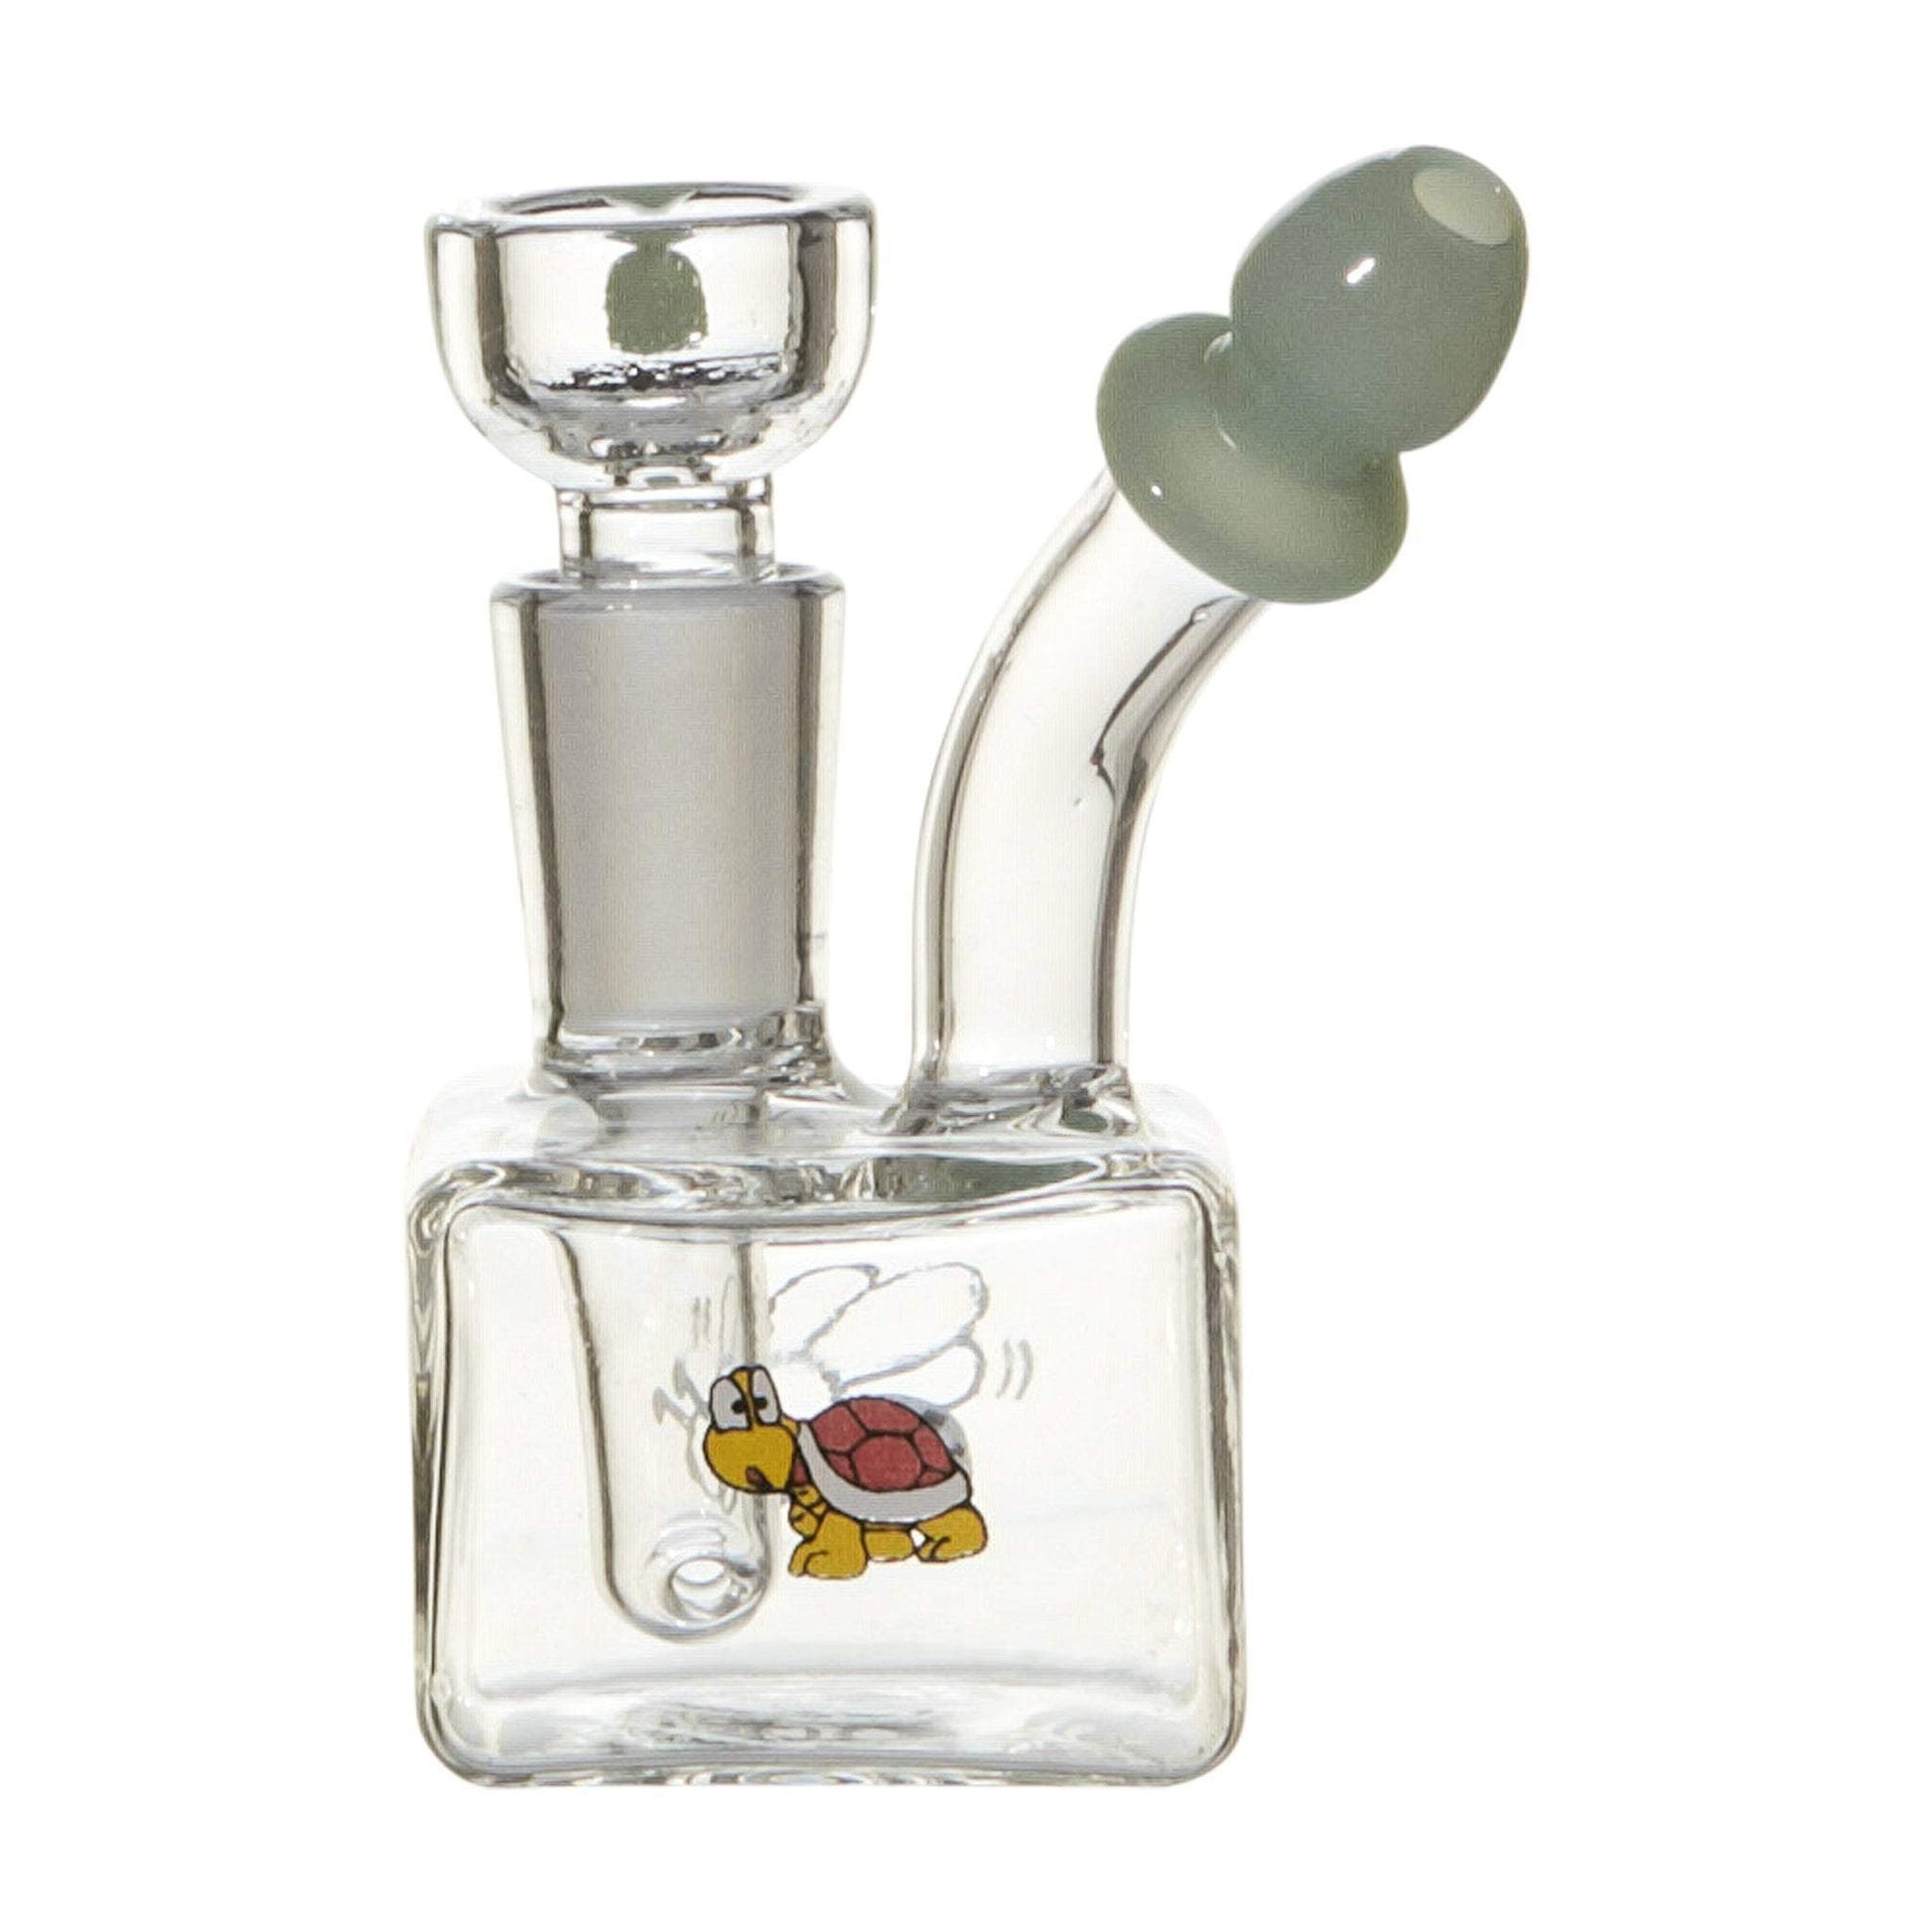 3.5-inch glass bong mini smoke box smoking device unique shape square shape base with cartoon symbols